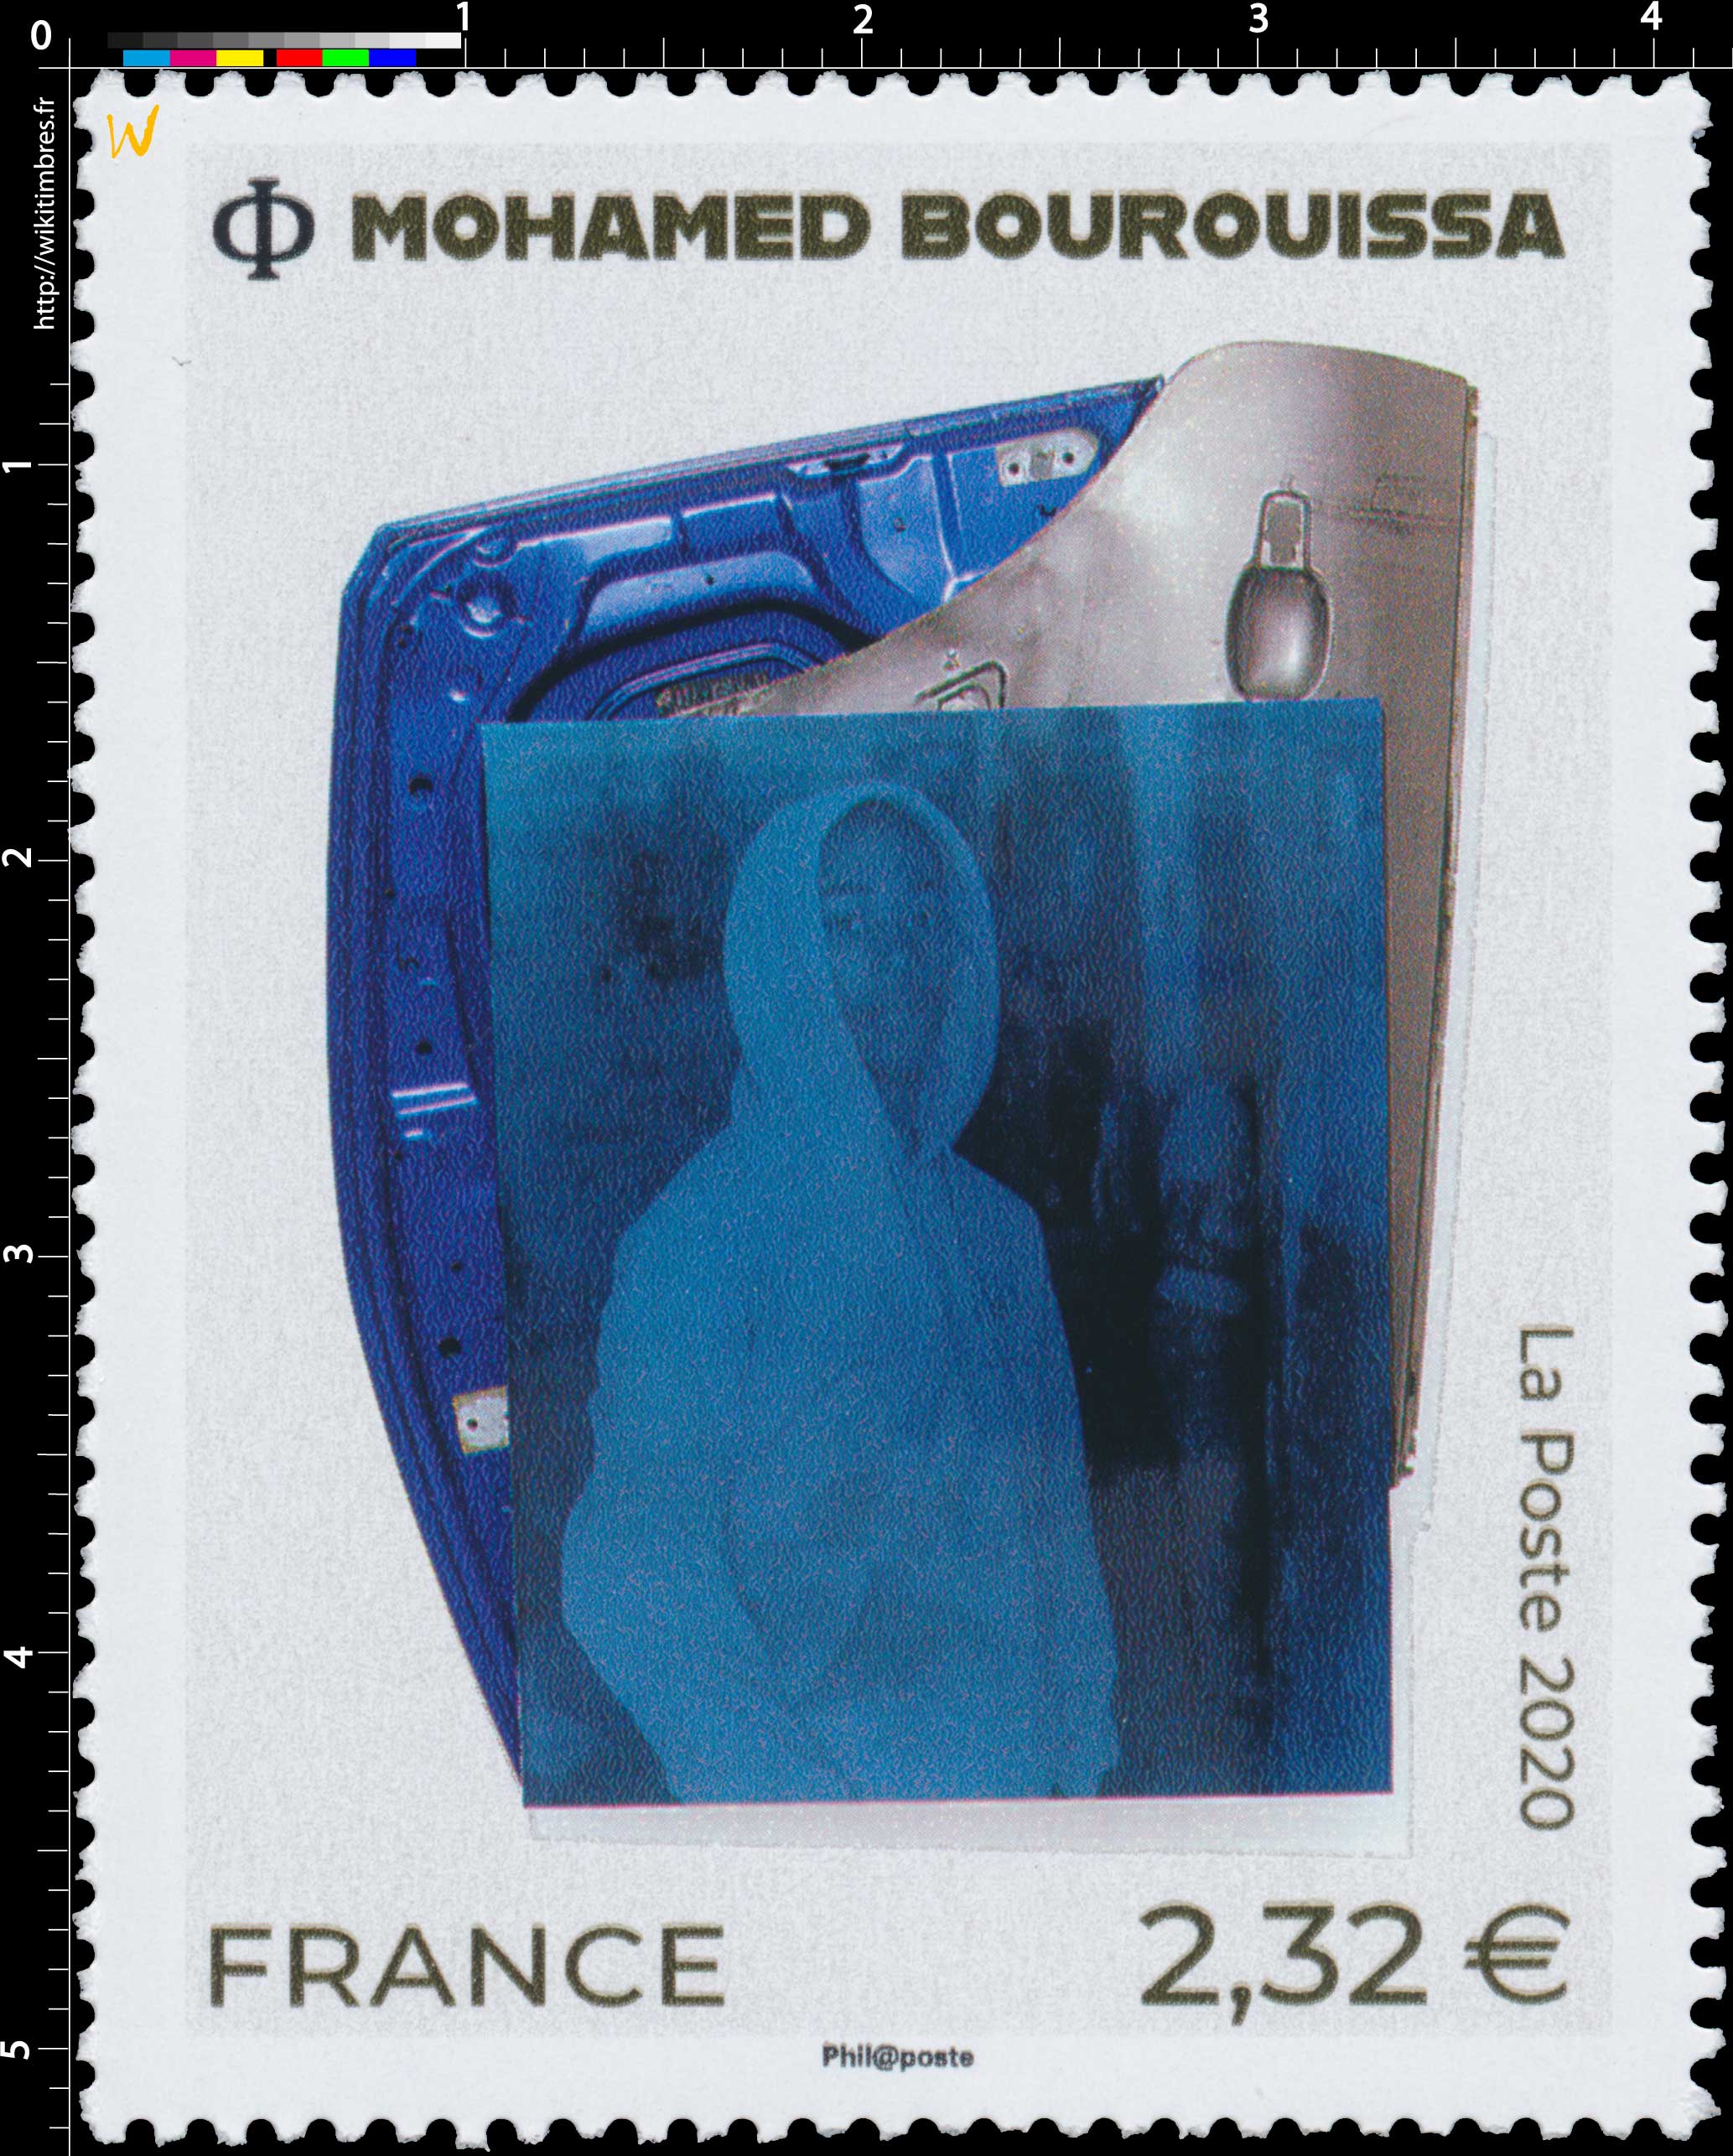 2020 Mohamed BOUROUISSA